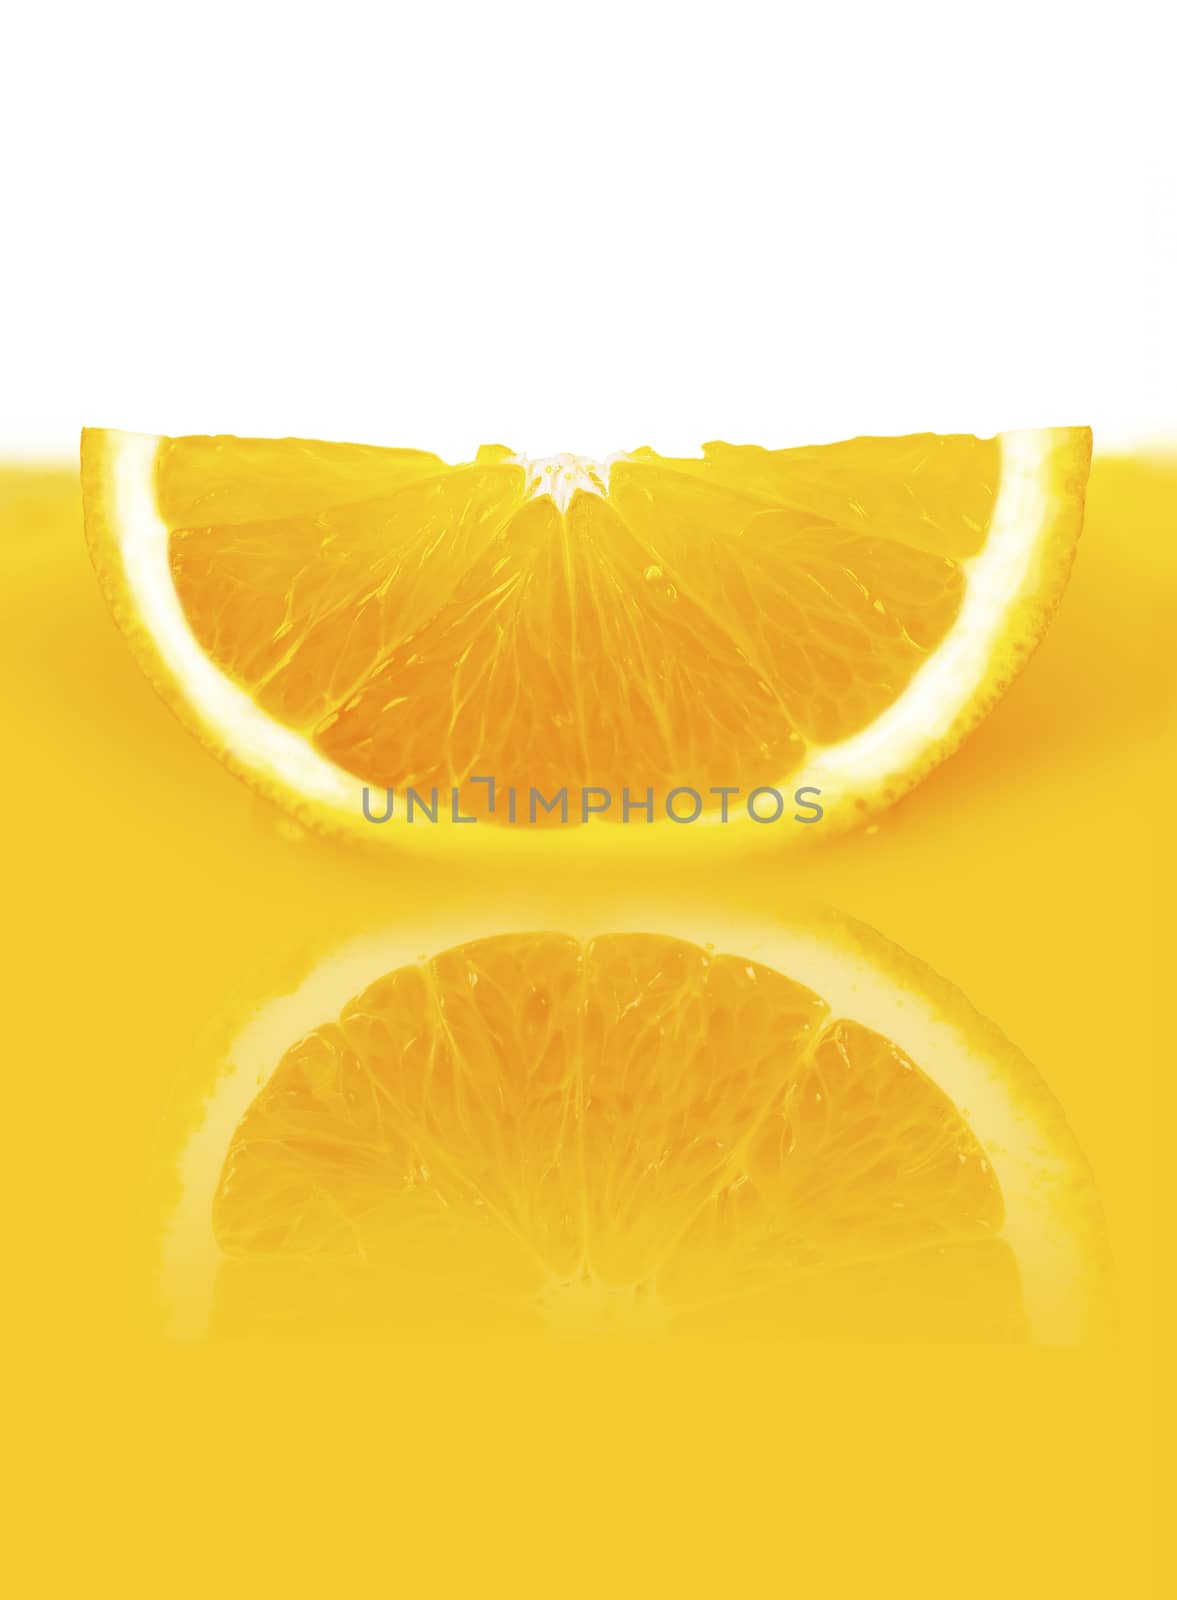 a slice of orange lying in a yellow orange juice